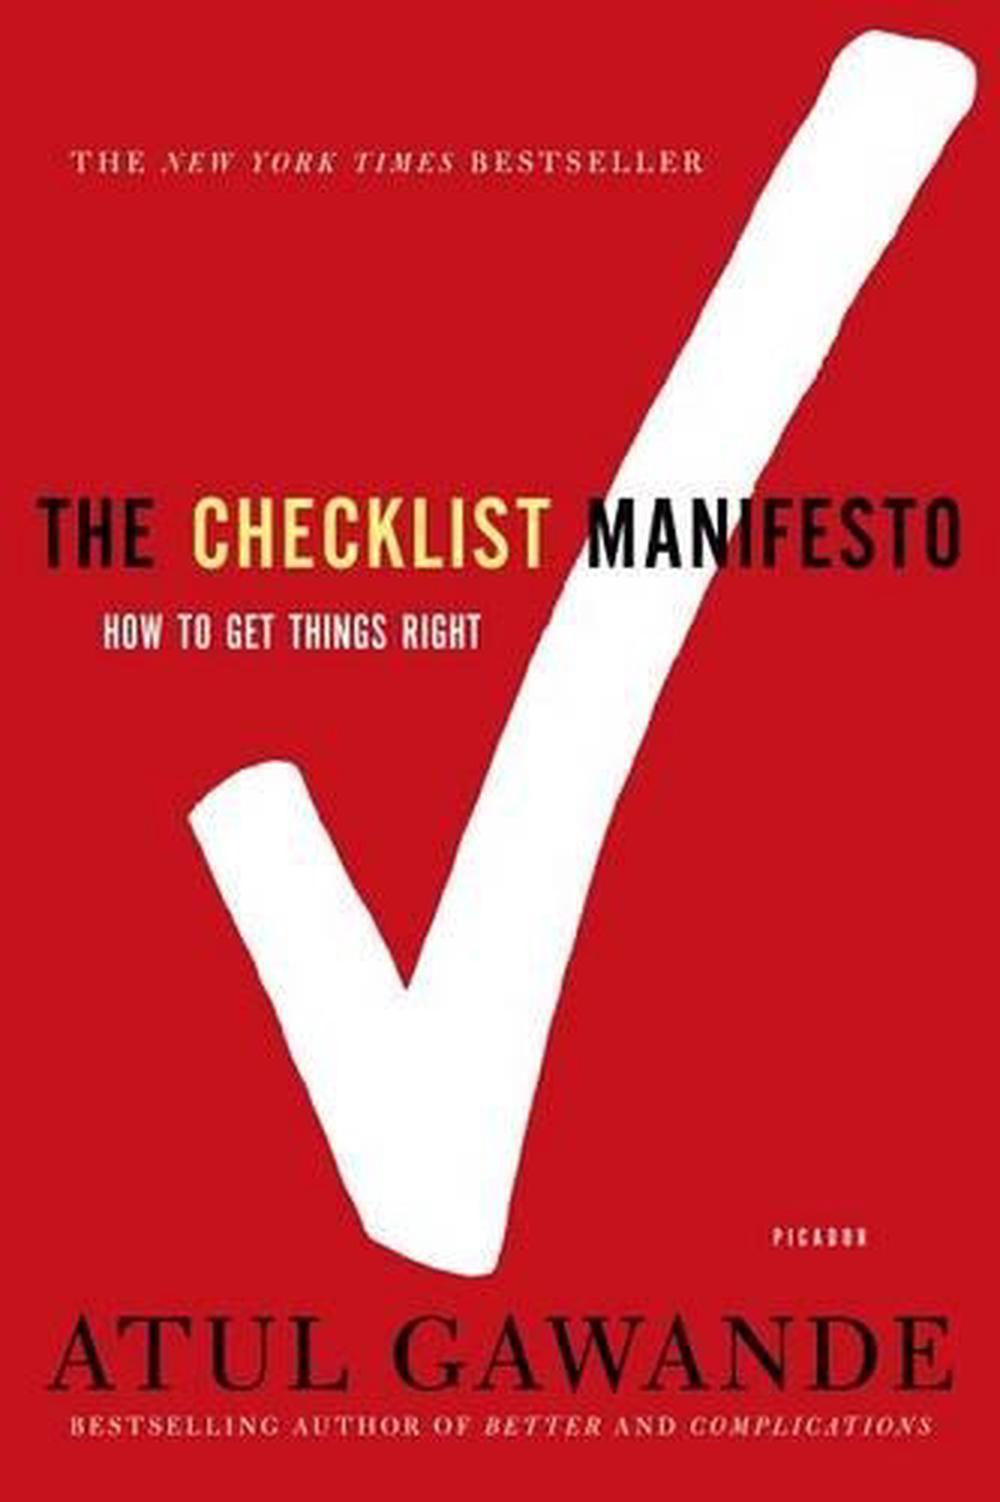 The Centrist Manifesto by Charles Wheelan